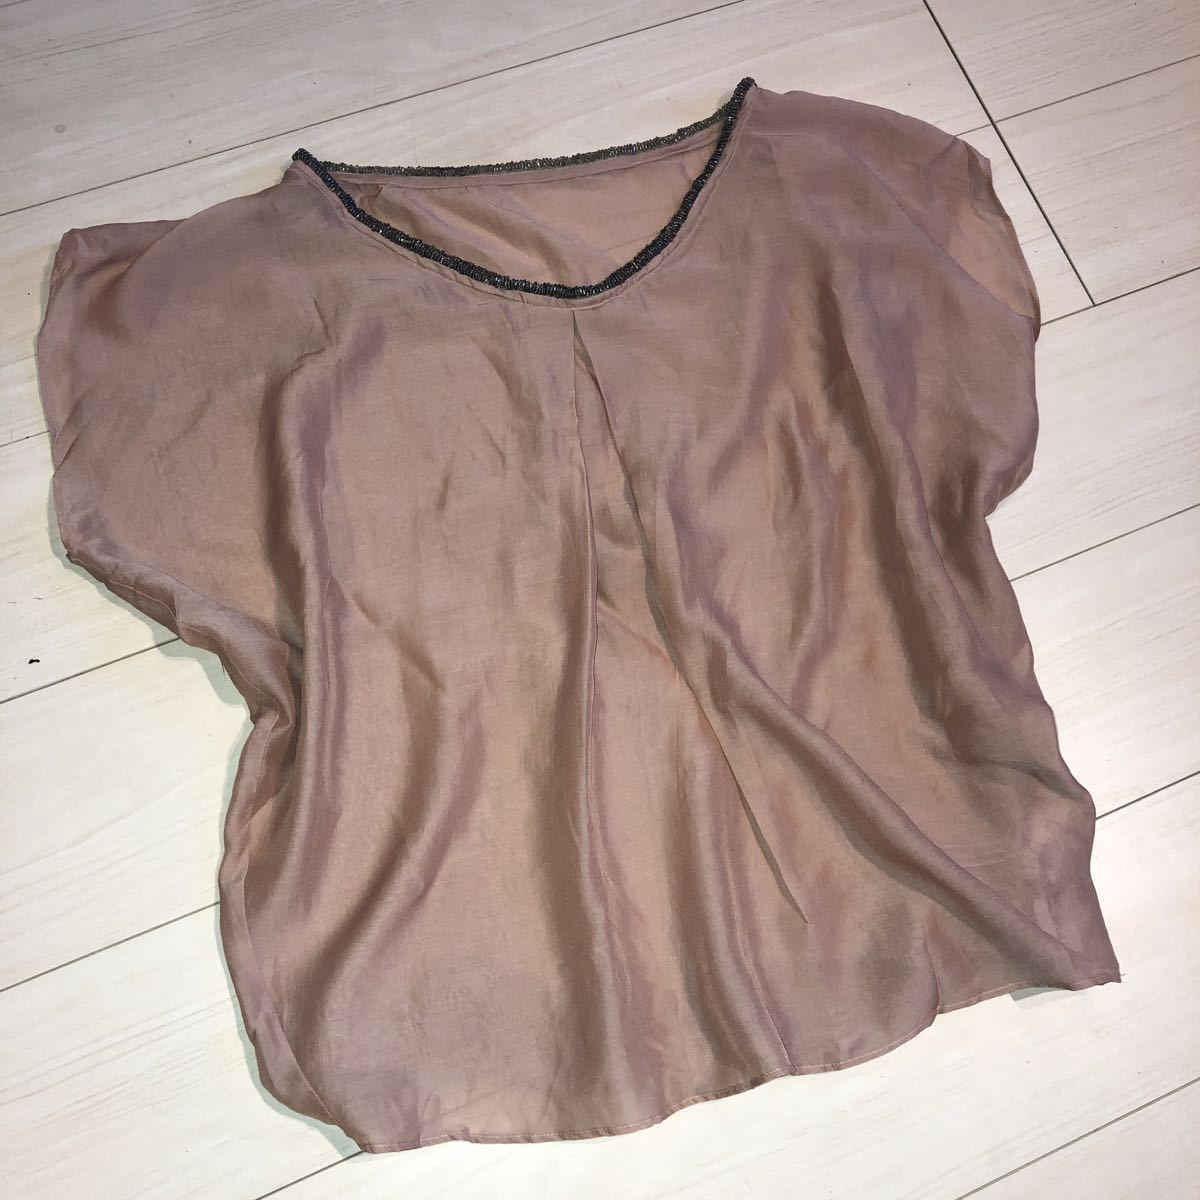  Le souk (Le souk) бисер имеется безрукавка блуза розовый 82-31182001 размер 38 tops прозрачный блуза 